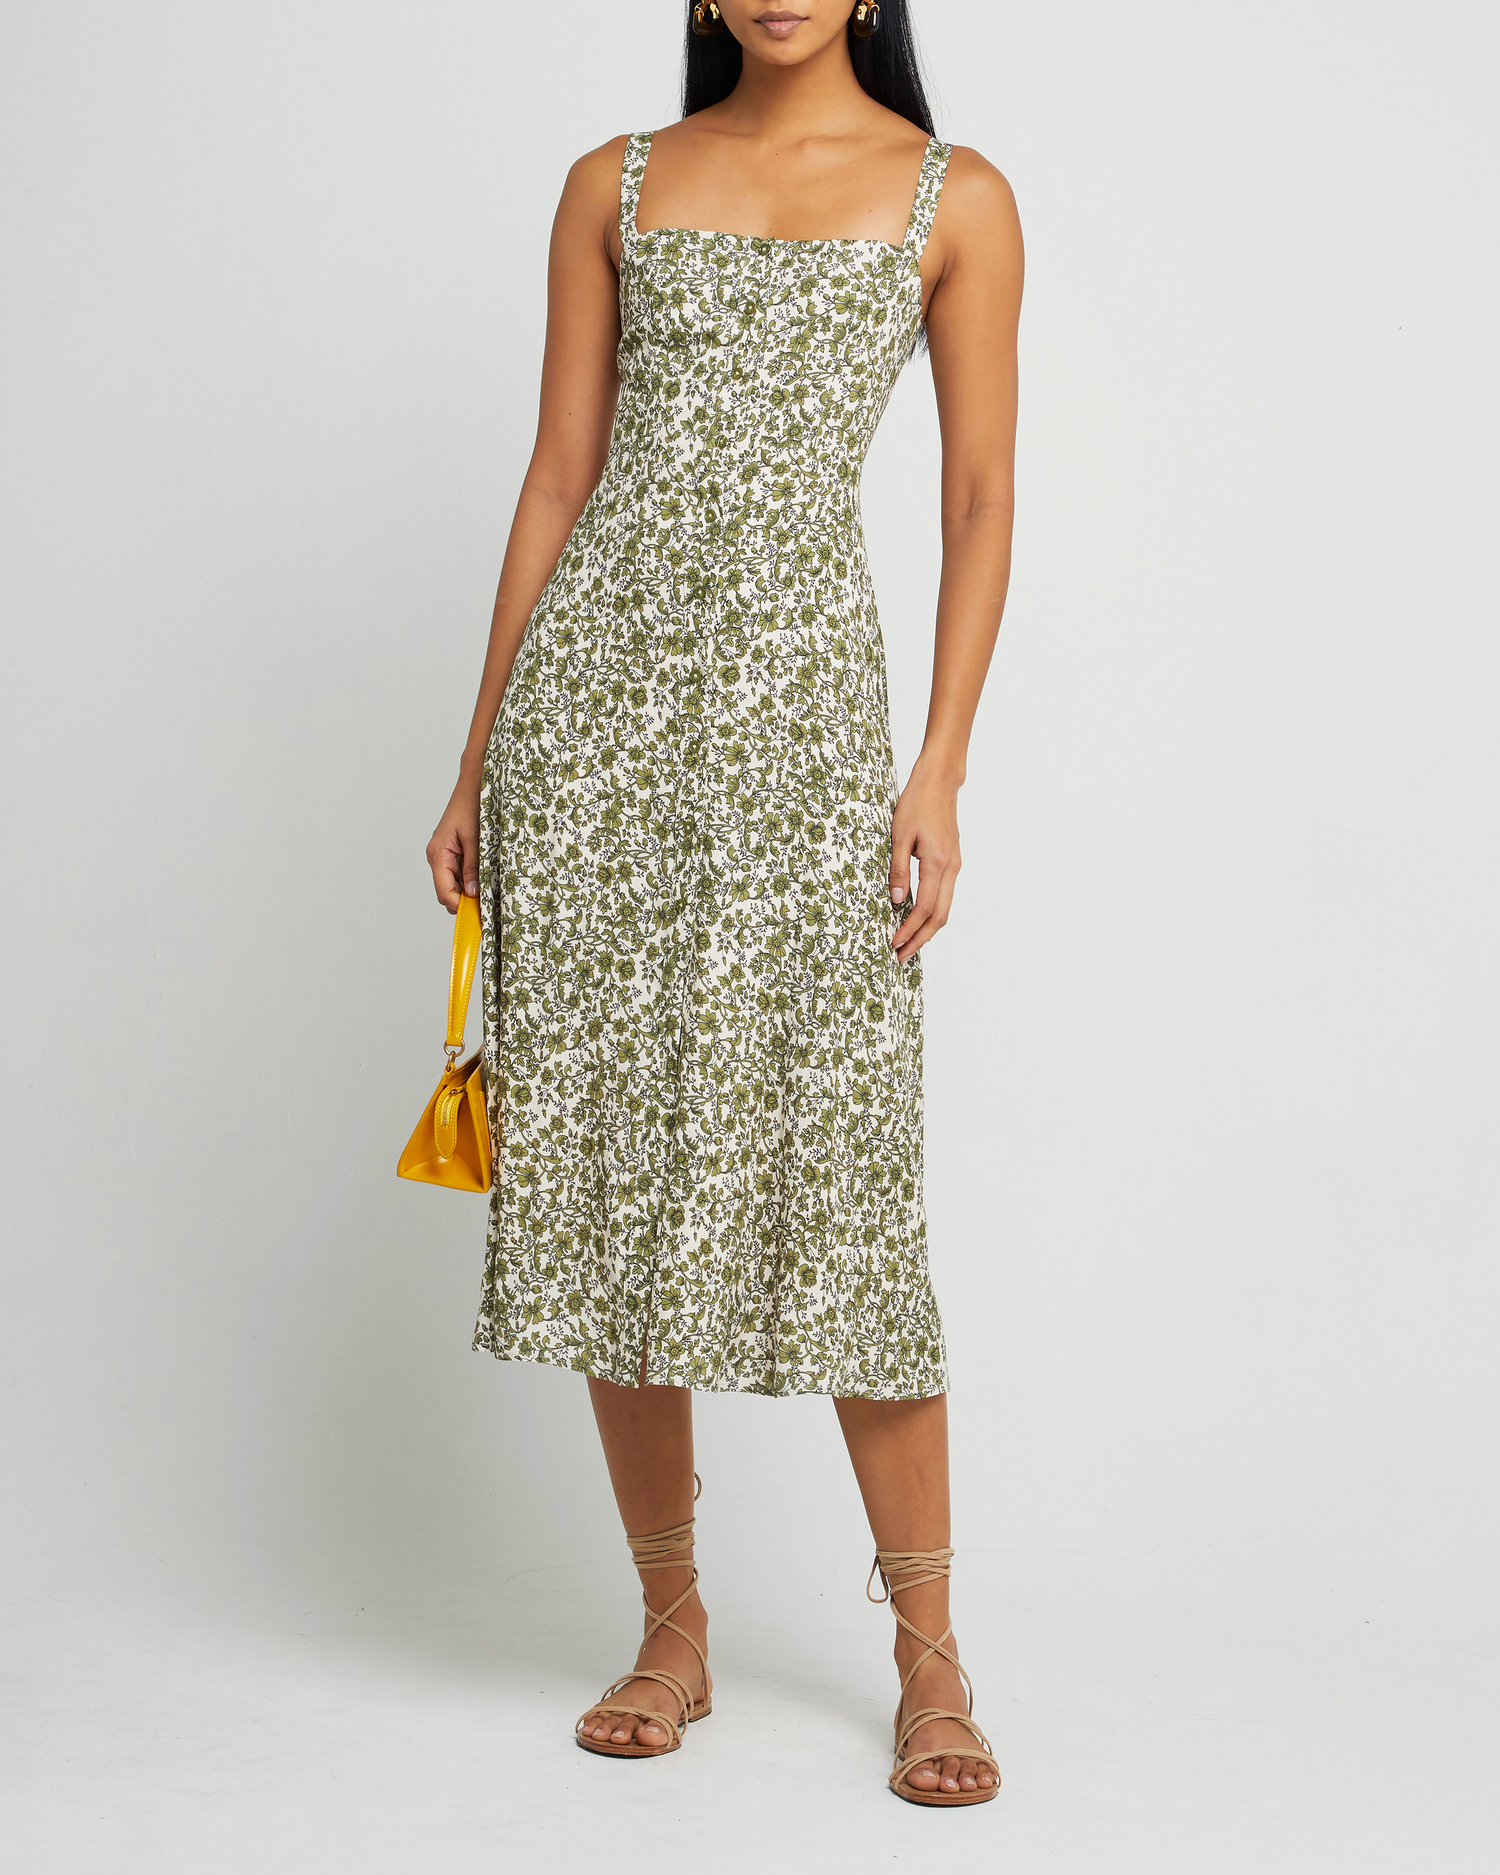 Fourth image of Juliette Dress, a green midi dress, floral, tank, slip, spaghetti strap